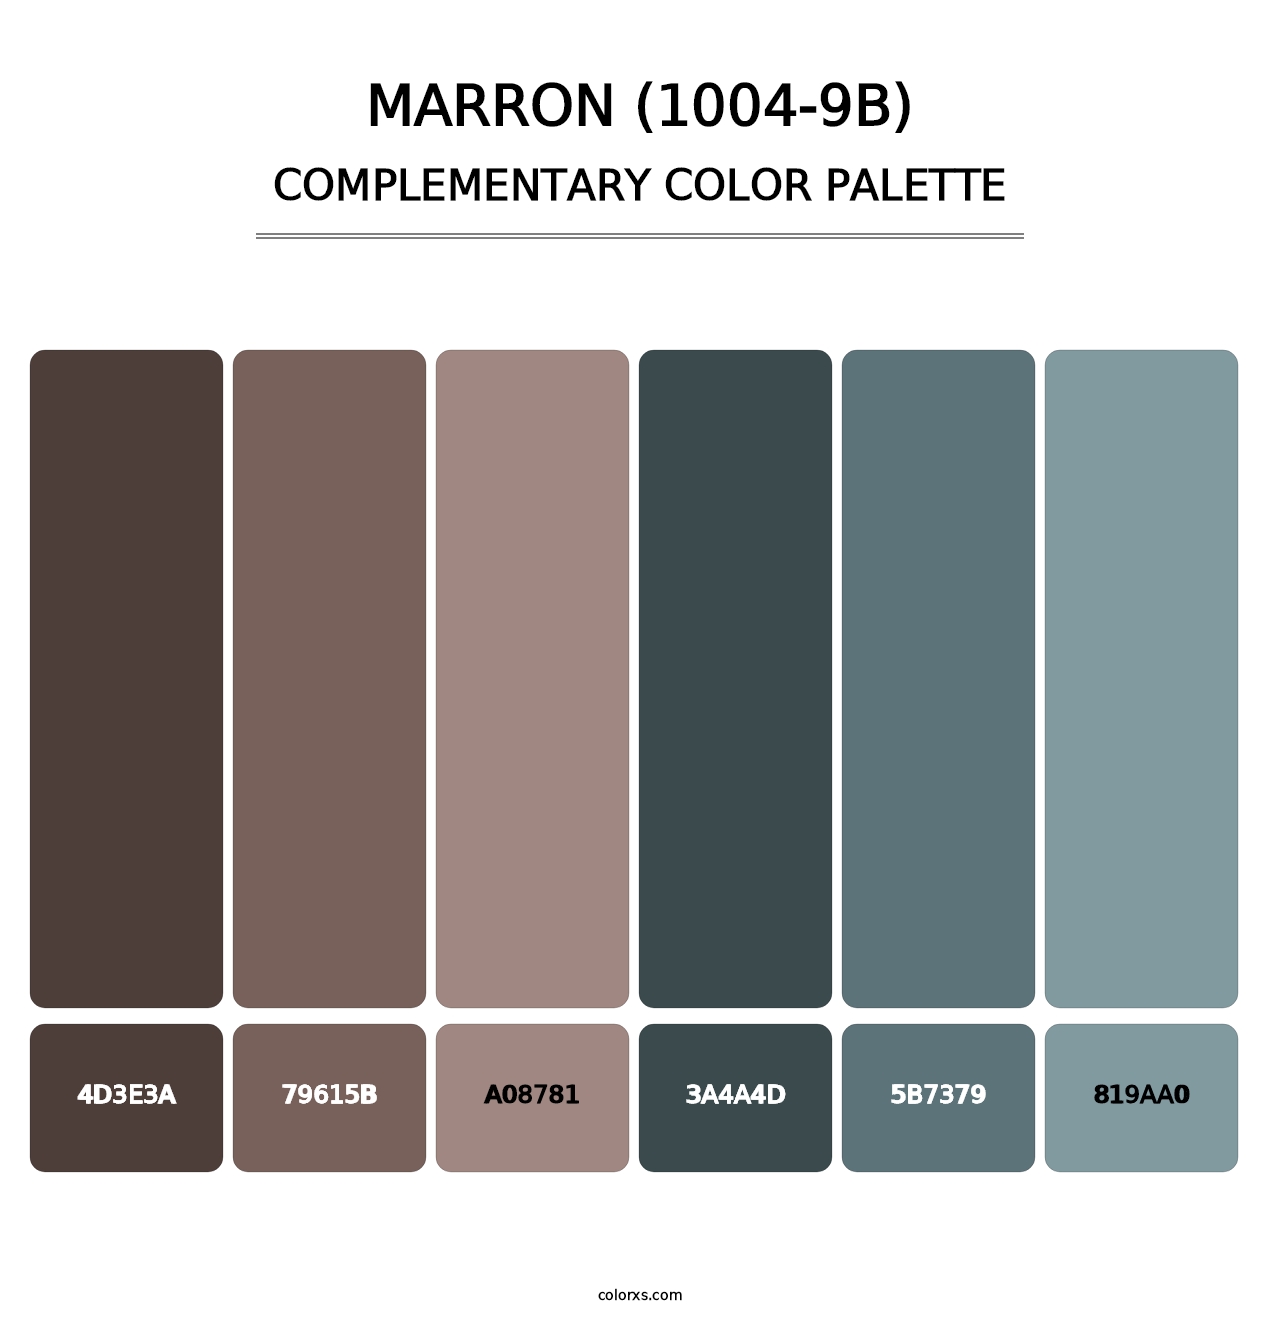 Marron (1004-9B) - Complementary Color Palette